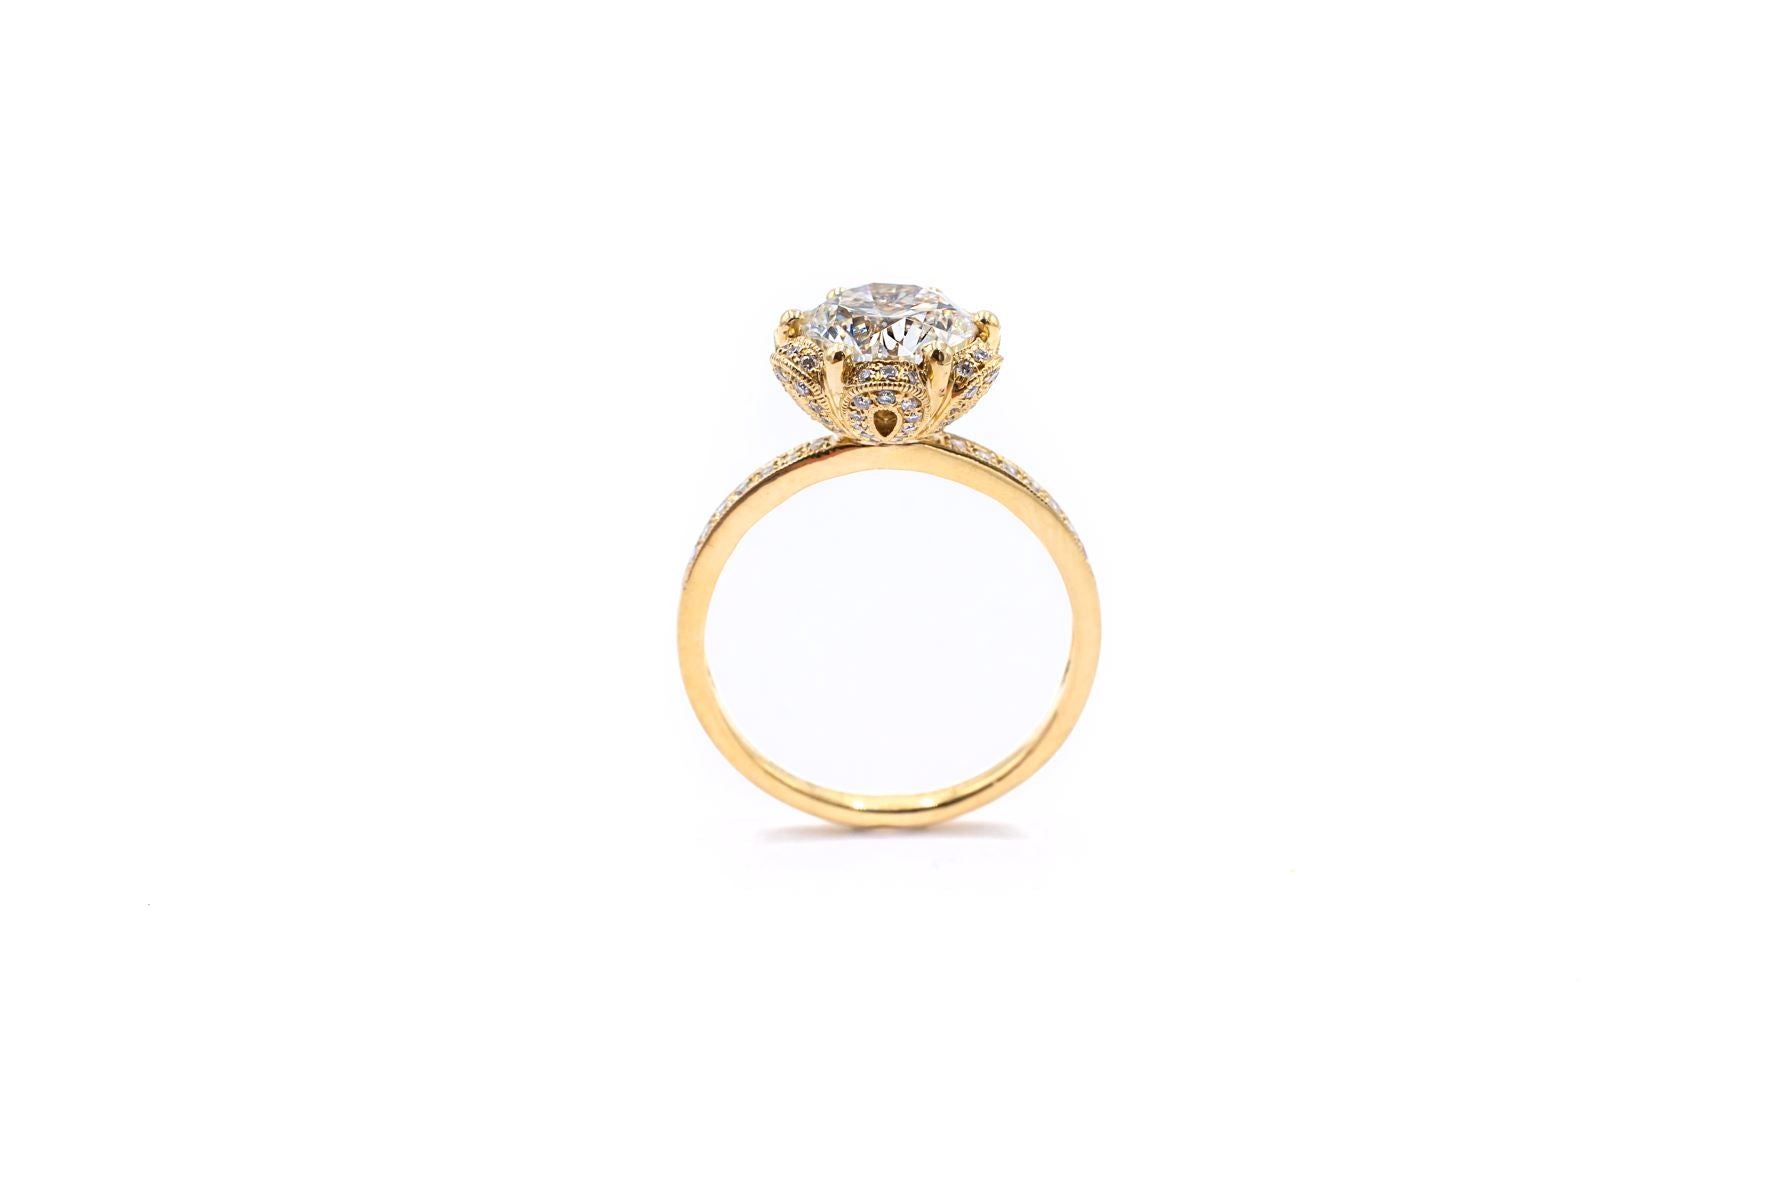 2.26 ctw GIA Certified Diamond Engagement Ring 18k